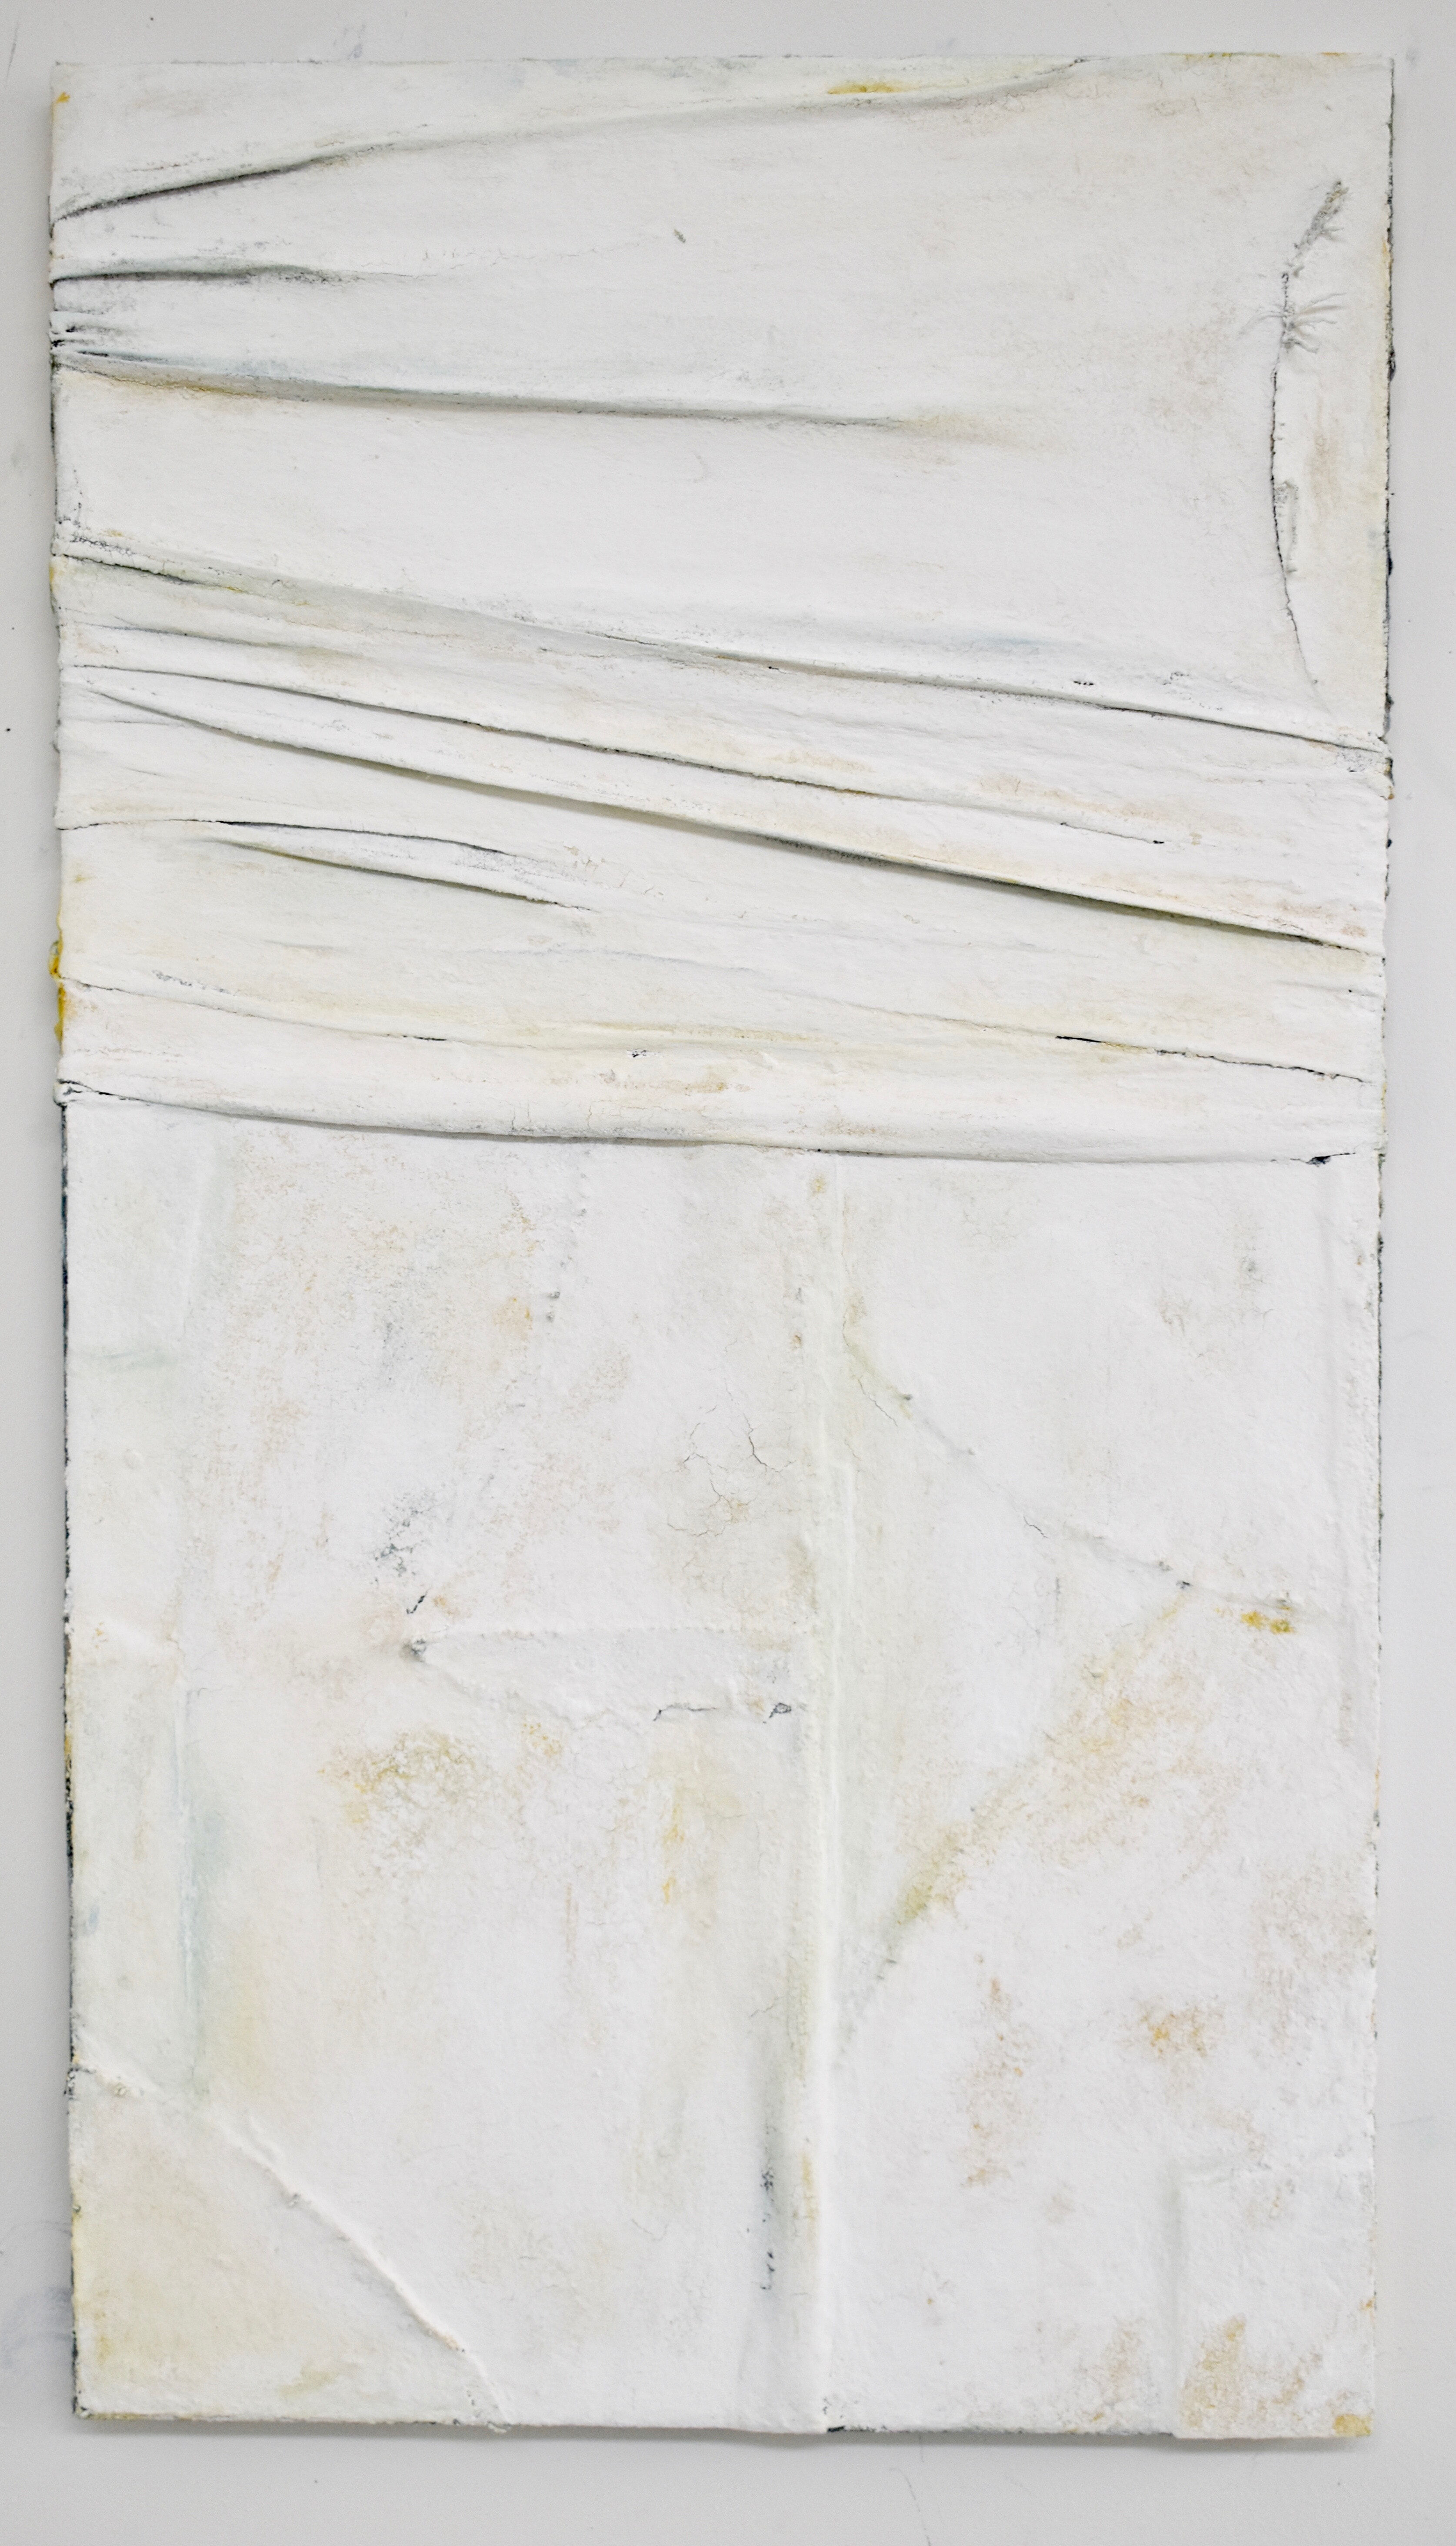 5.White Pull  Wrap II, 2018, Fabric & Mixed media on canvas, 92cmx51cm.